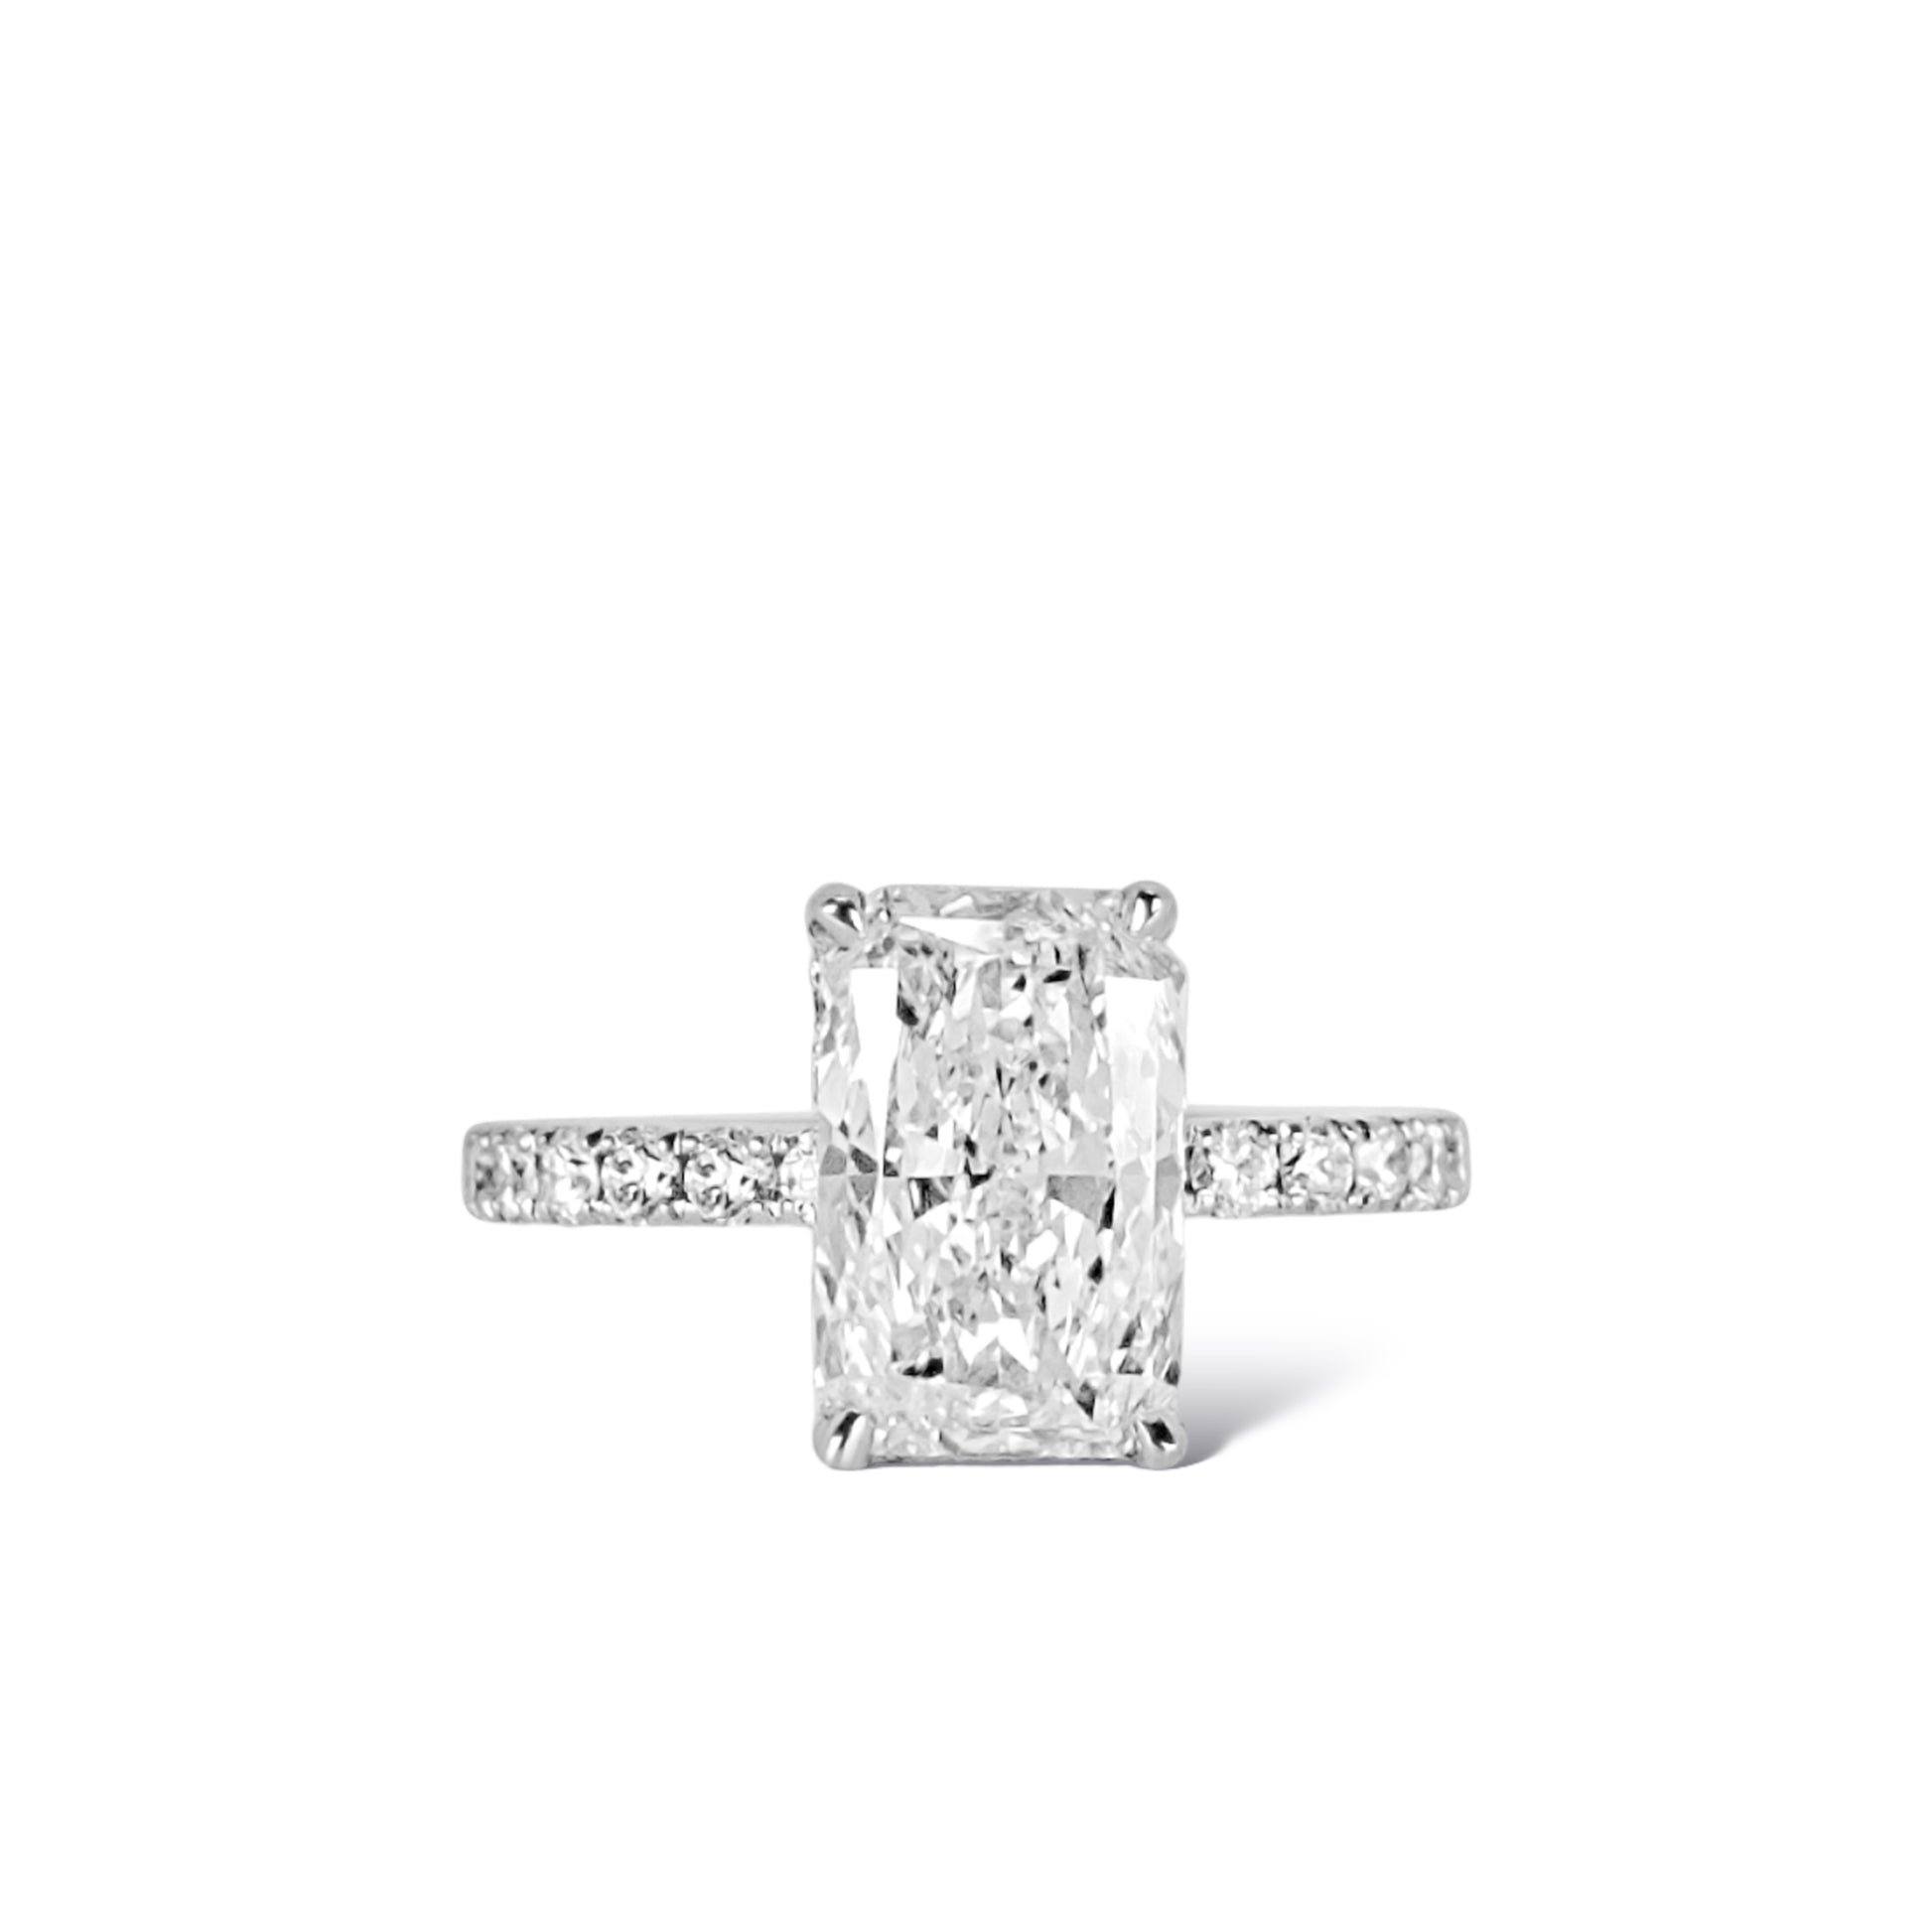 3.00ct Radiant Cut Diamond Engagement Ring in Platinum. 3 carat engagement ring Hong Kong USA Australia New Zealand